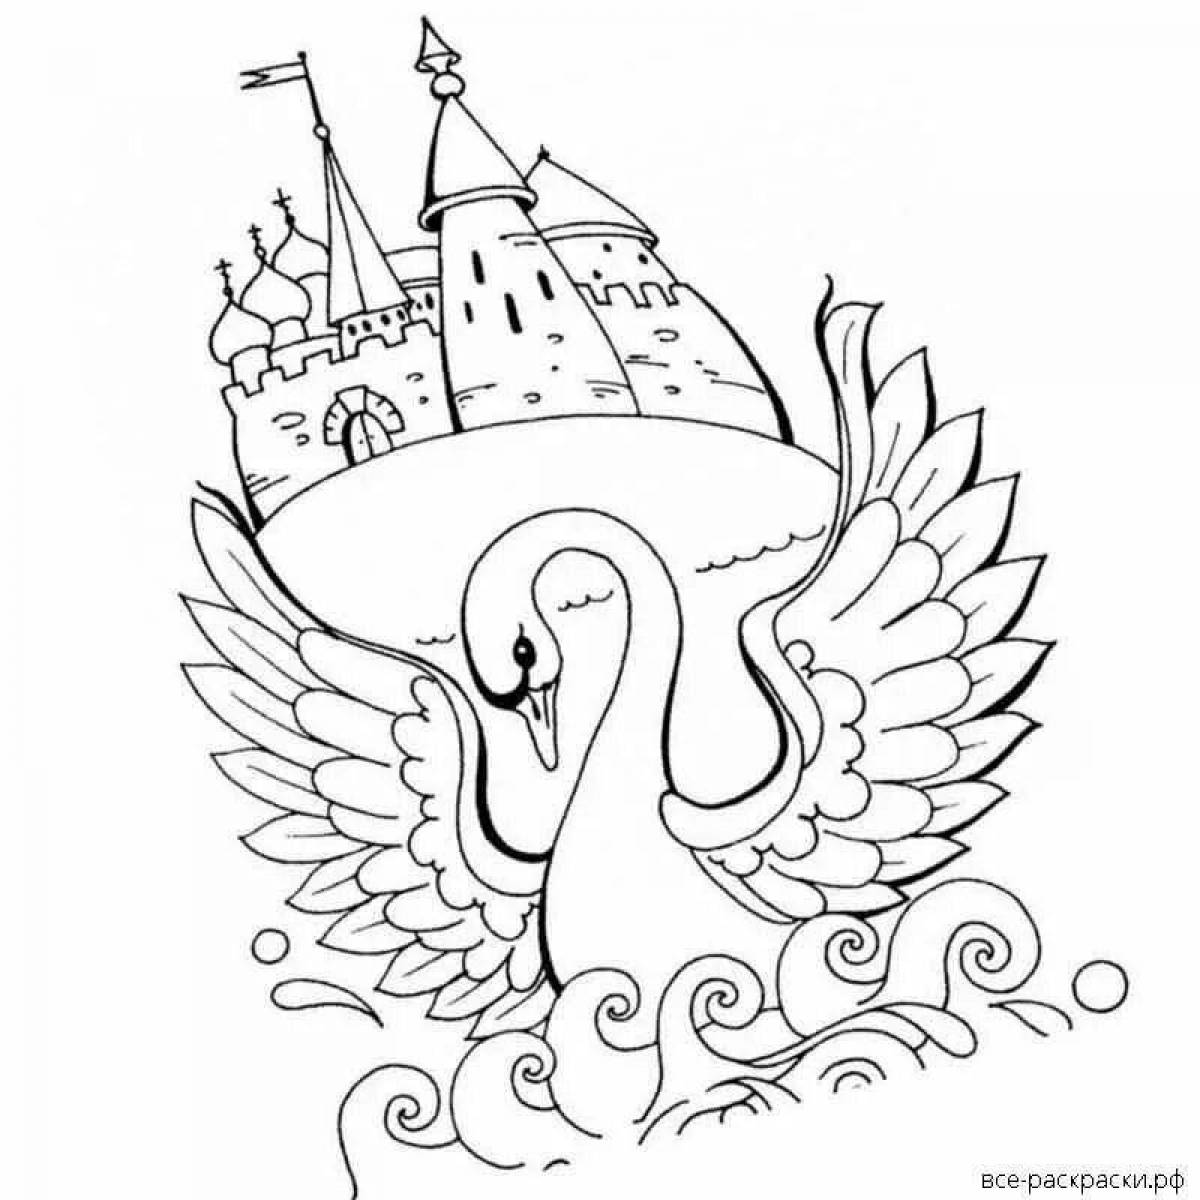 Царевна лебедь из сказки о царе салтане #3